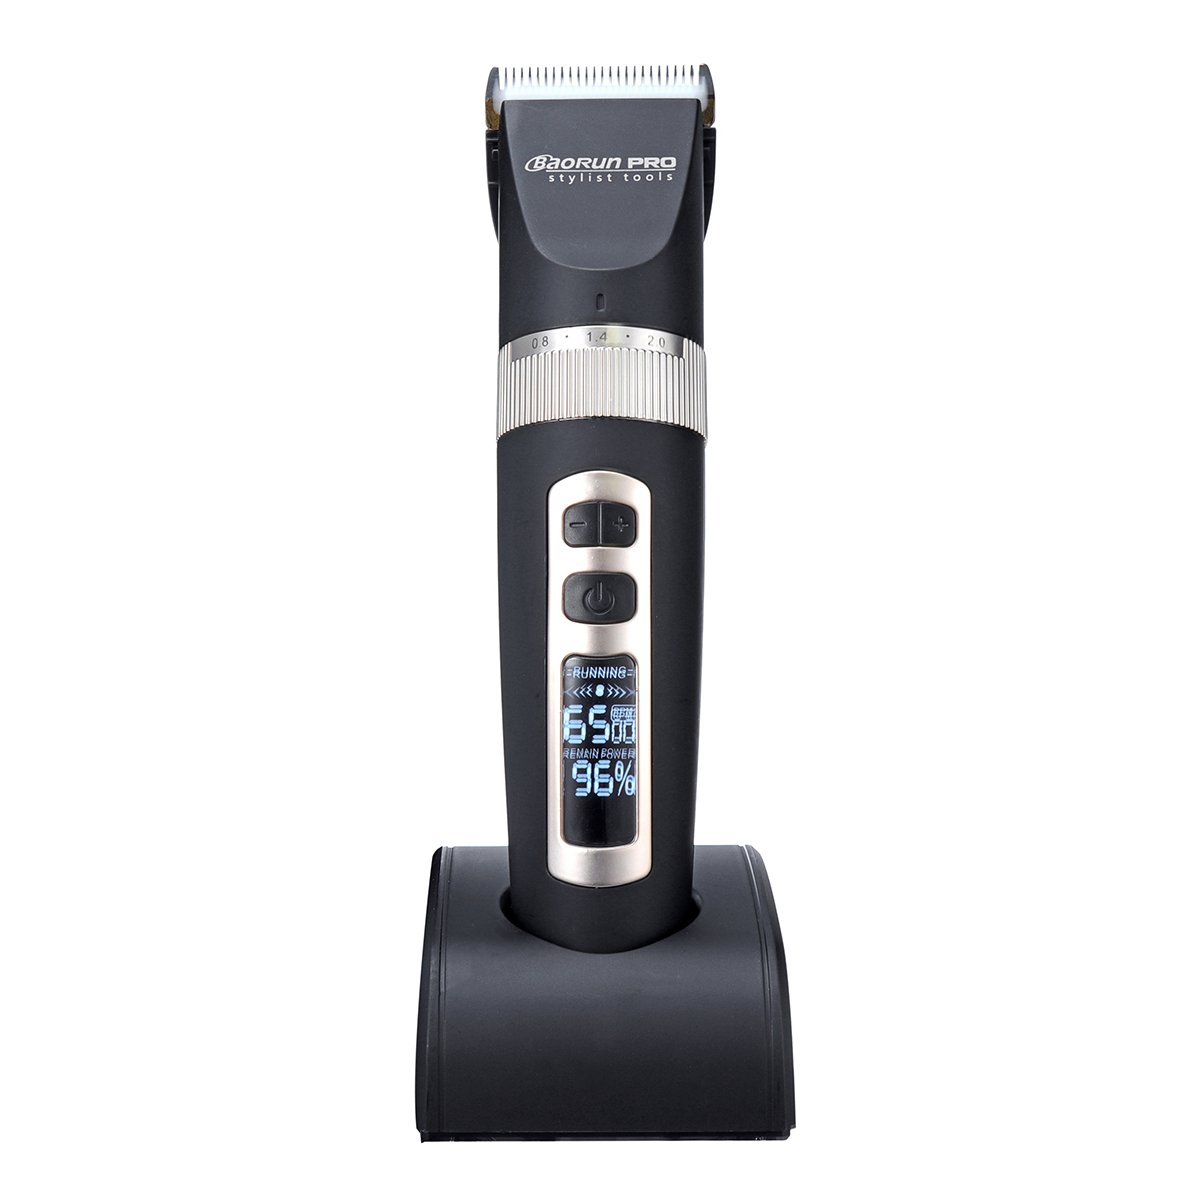 BaoRun-LCD-Display-Electric-Hair-Clipper-Beard-Shaver-Trimmer-Low-Battery-Reminder-1369230